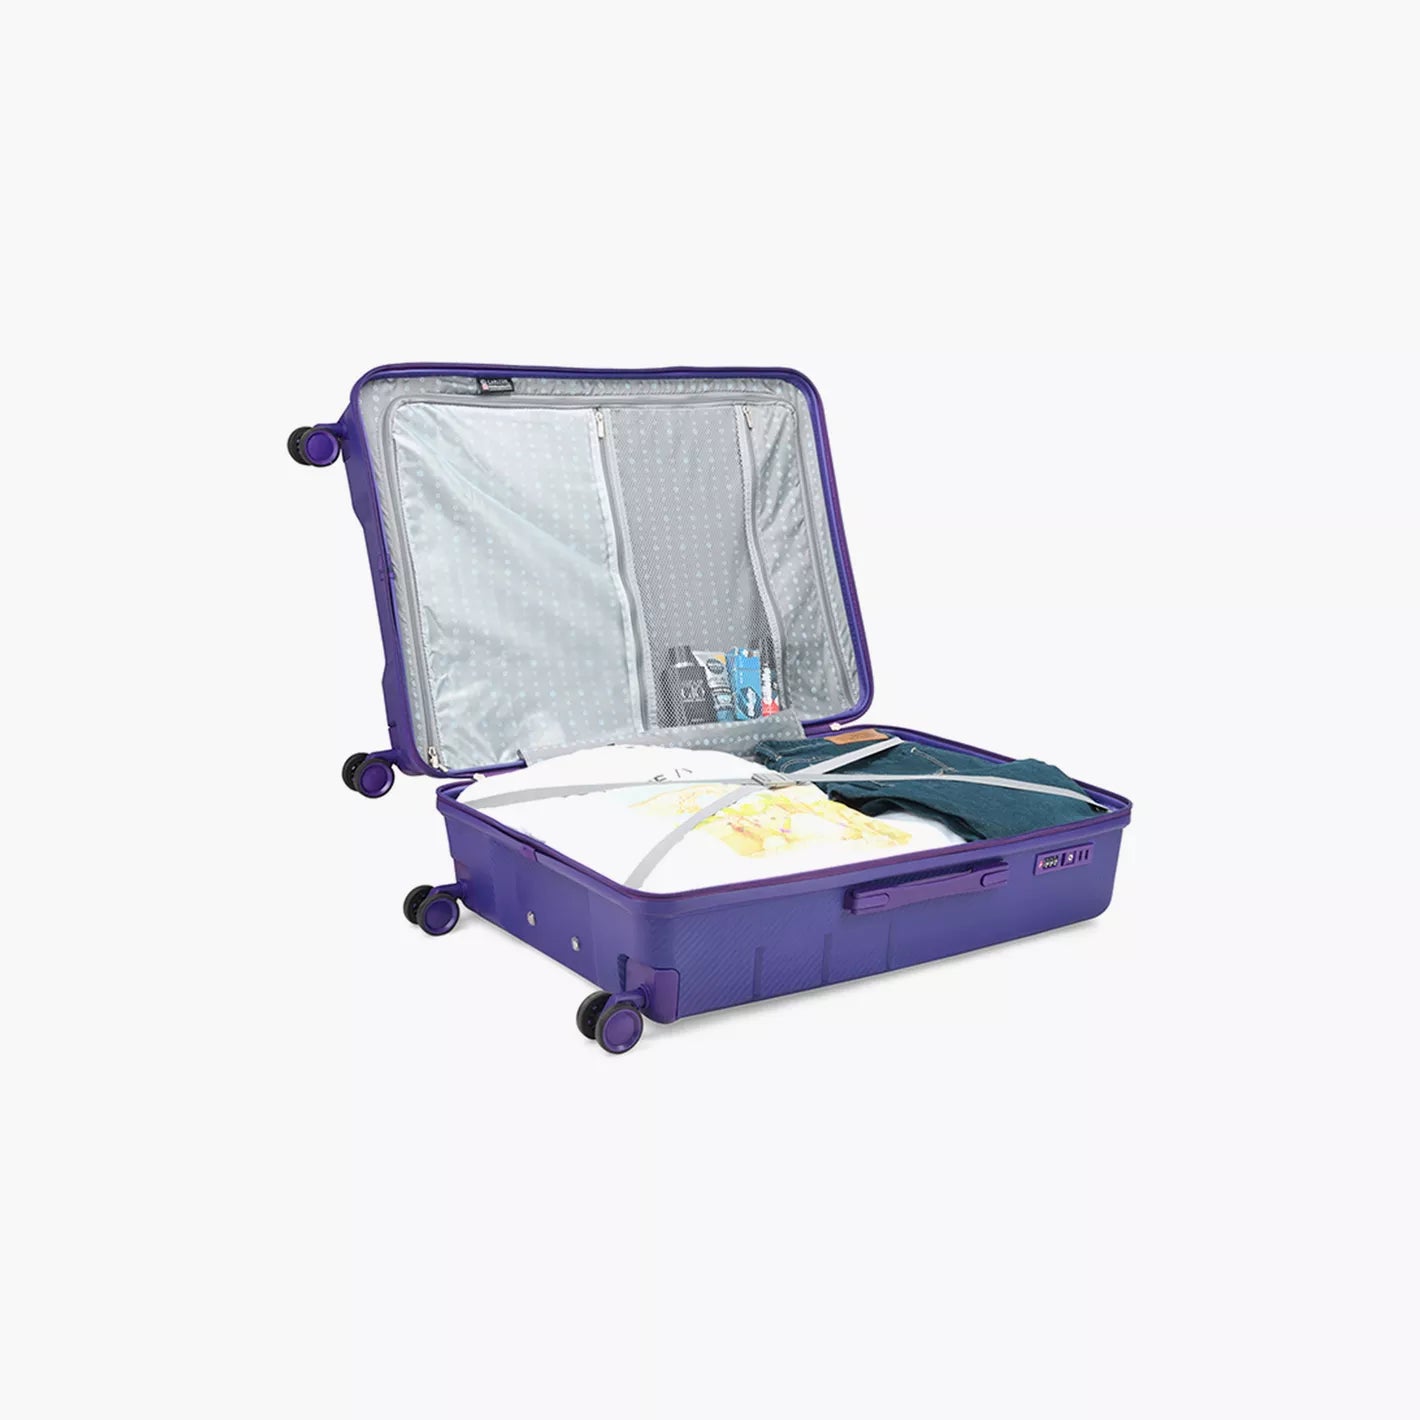 Carlton Chroma Active Hard Side Luggage | Trolley Bags | Halabh.com